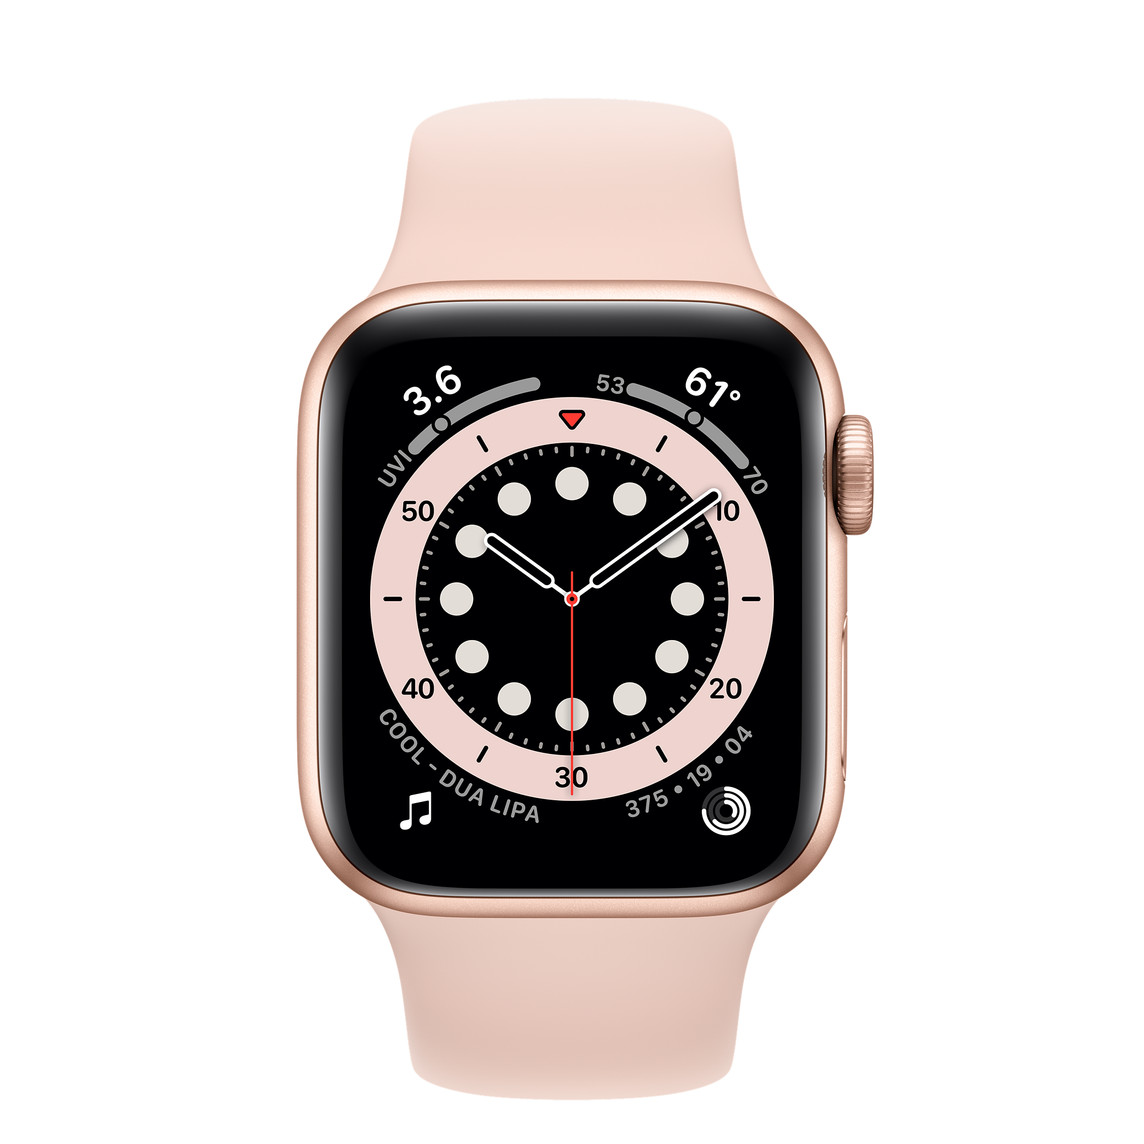 Apple Watch SERIES 6 Vàng Hồng Size 40 (Like new 99%) - damluongstore.com.vn